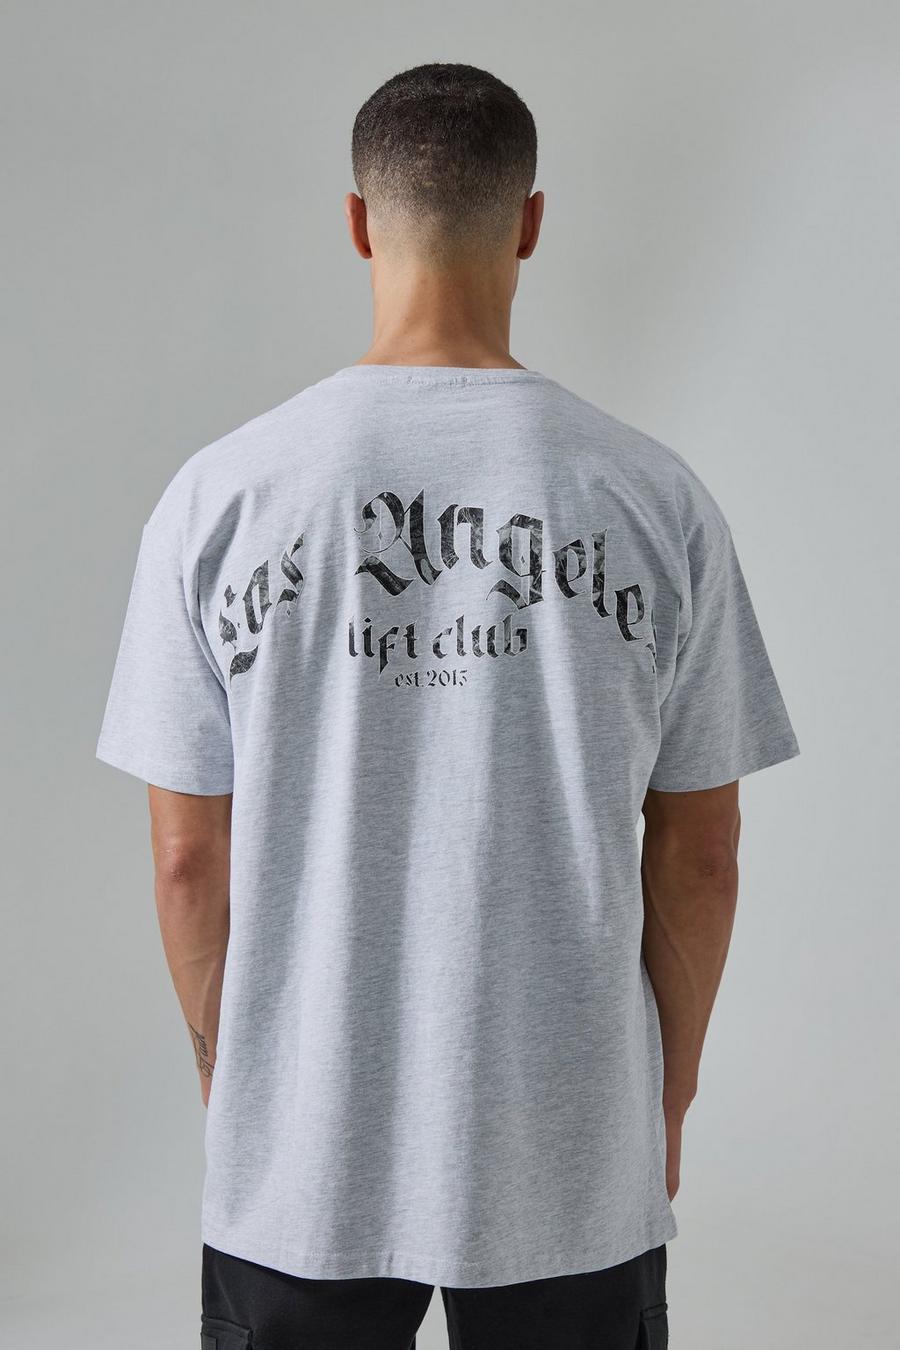 Man Active Oversize T-Shirt mit La Lift Club Print, Grey marl